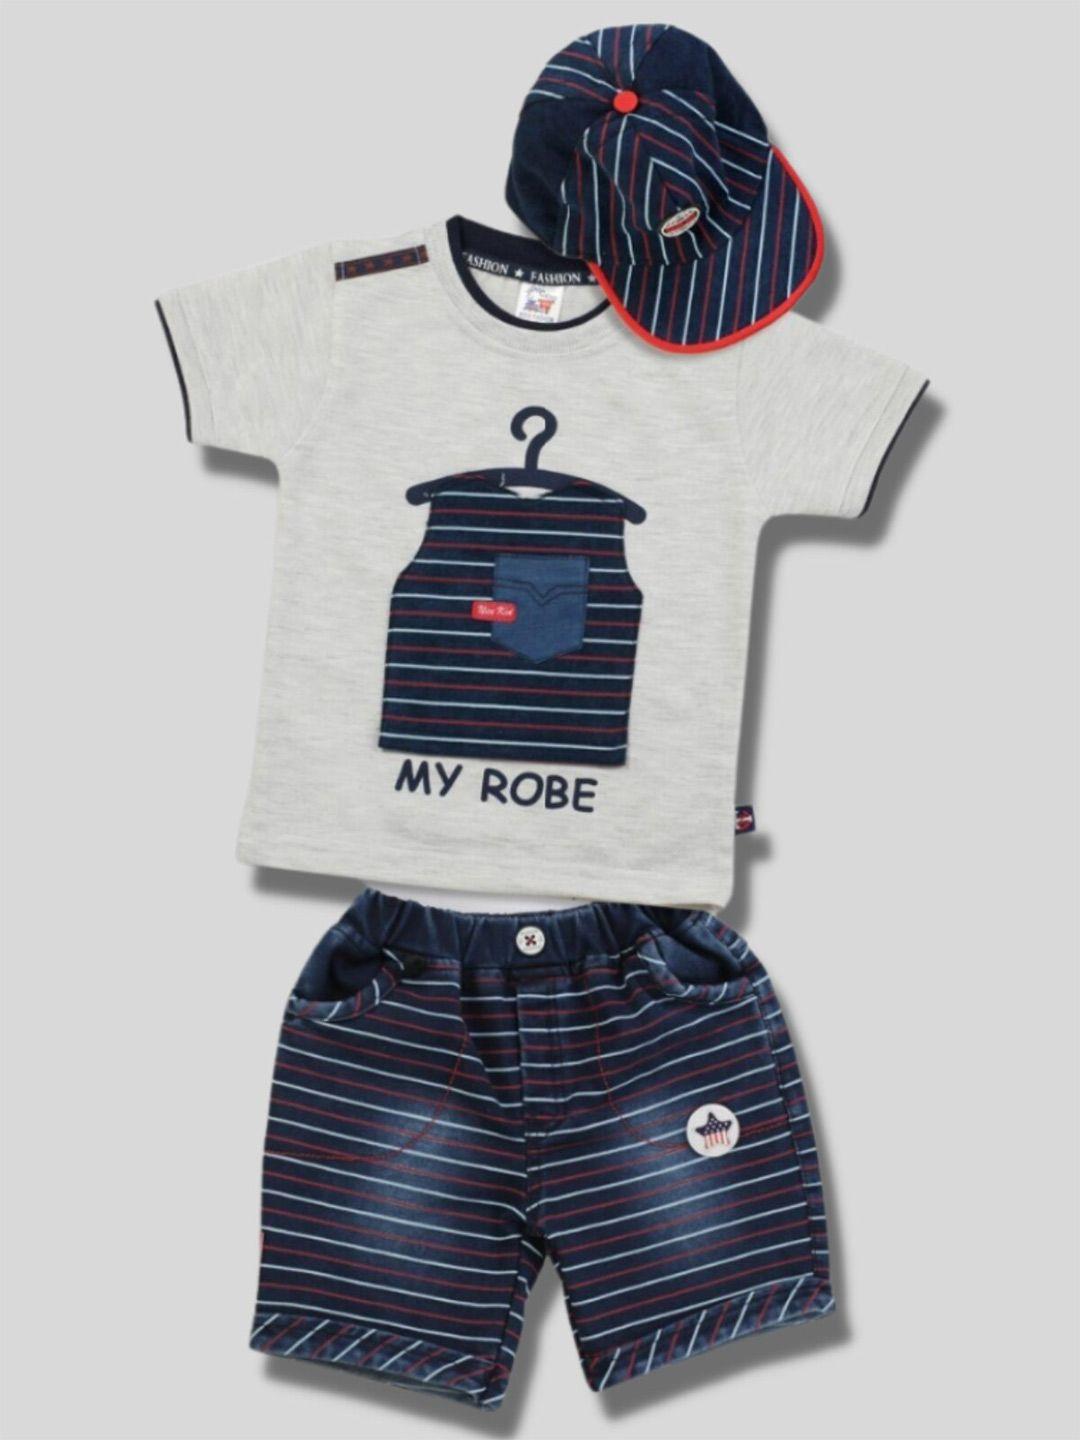 YOUSTYLO Infants Boys Printed T-shirt With Shorts Clothing Set